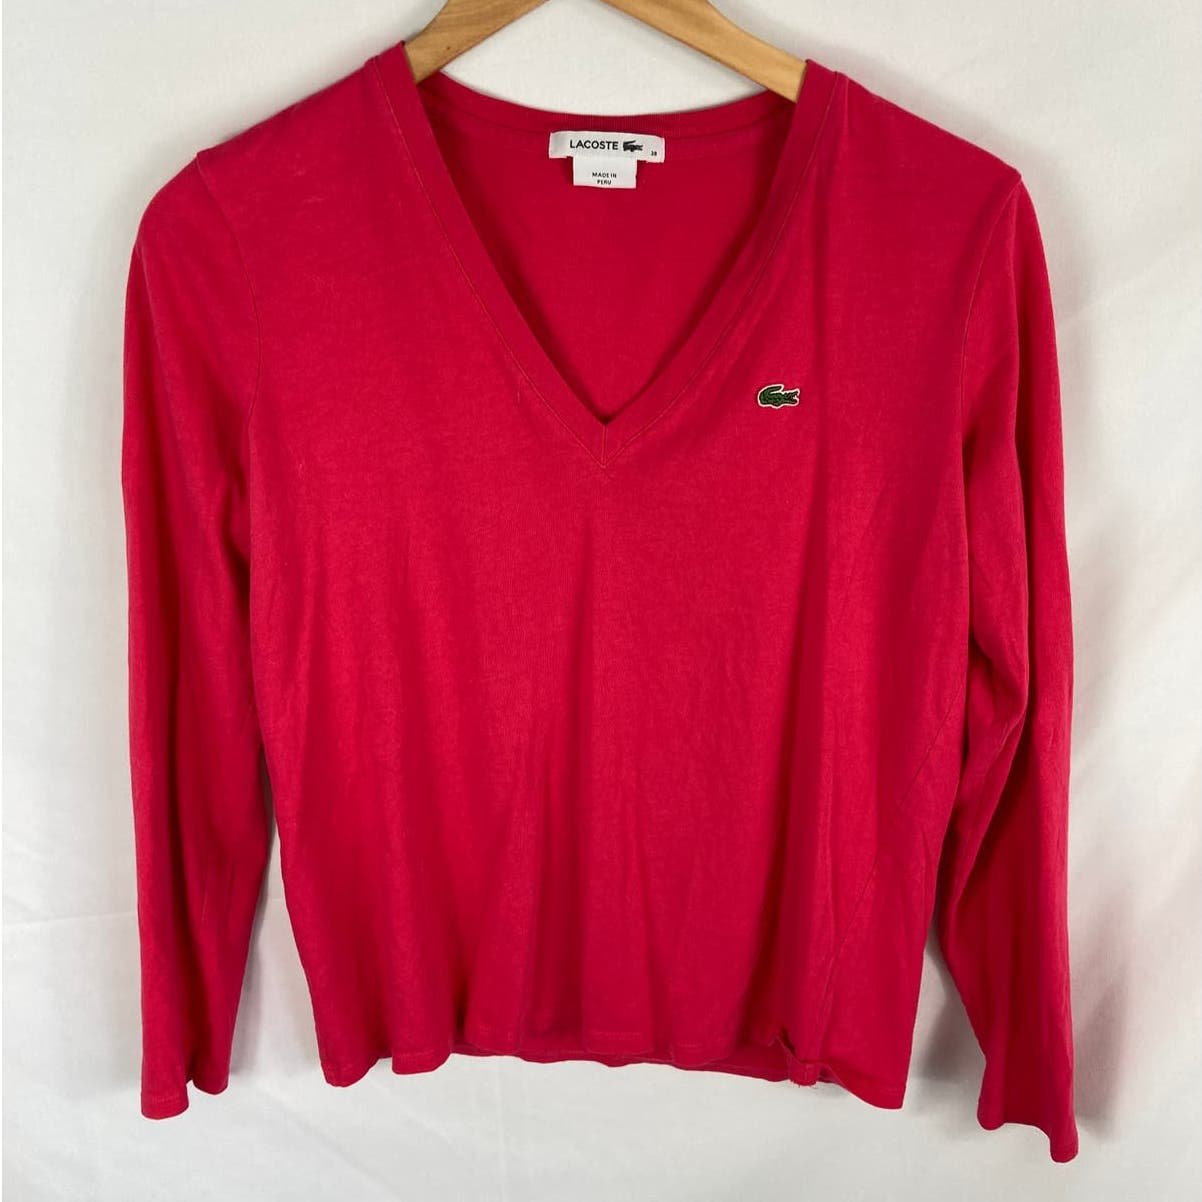 Exclusive Lacoste Pink V Neck Tshirt Size 38/Medium OB7